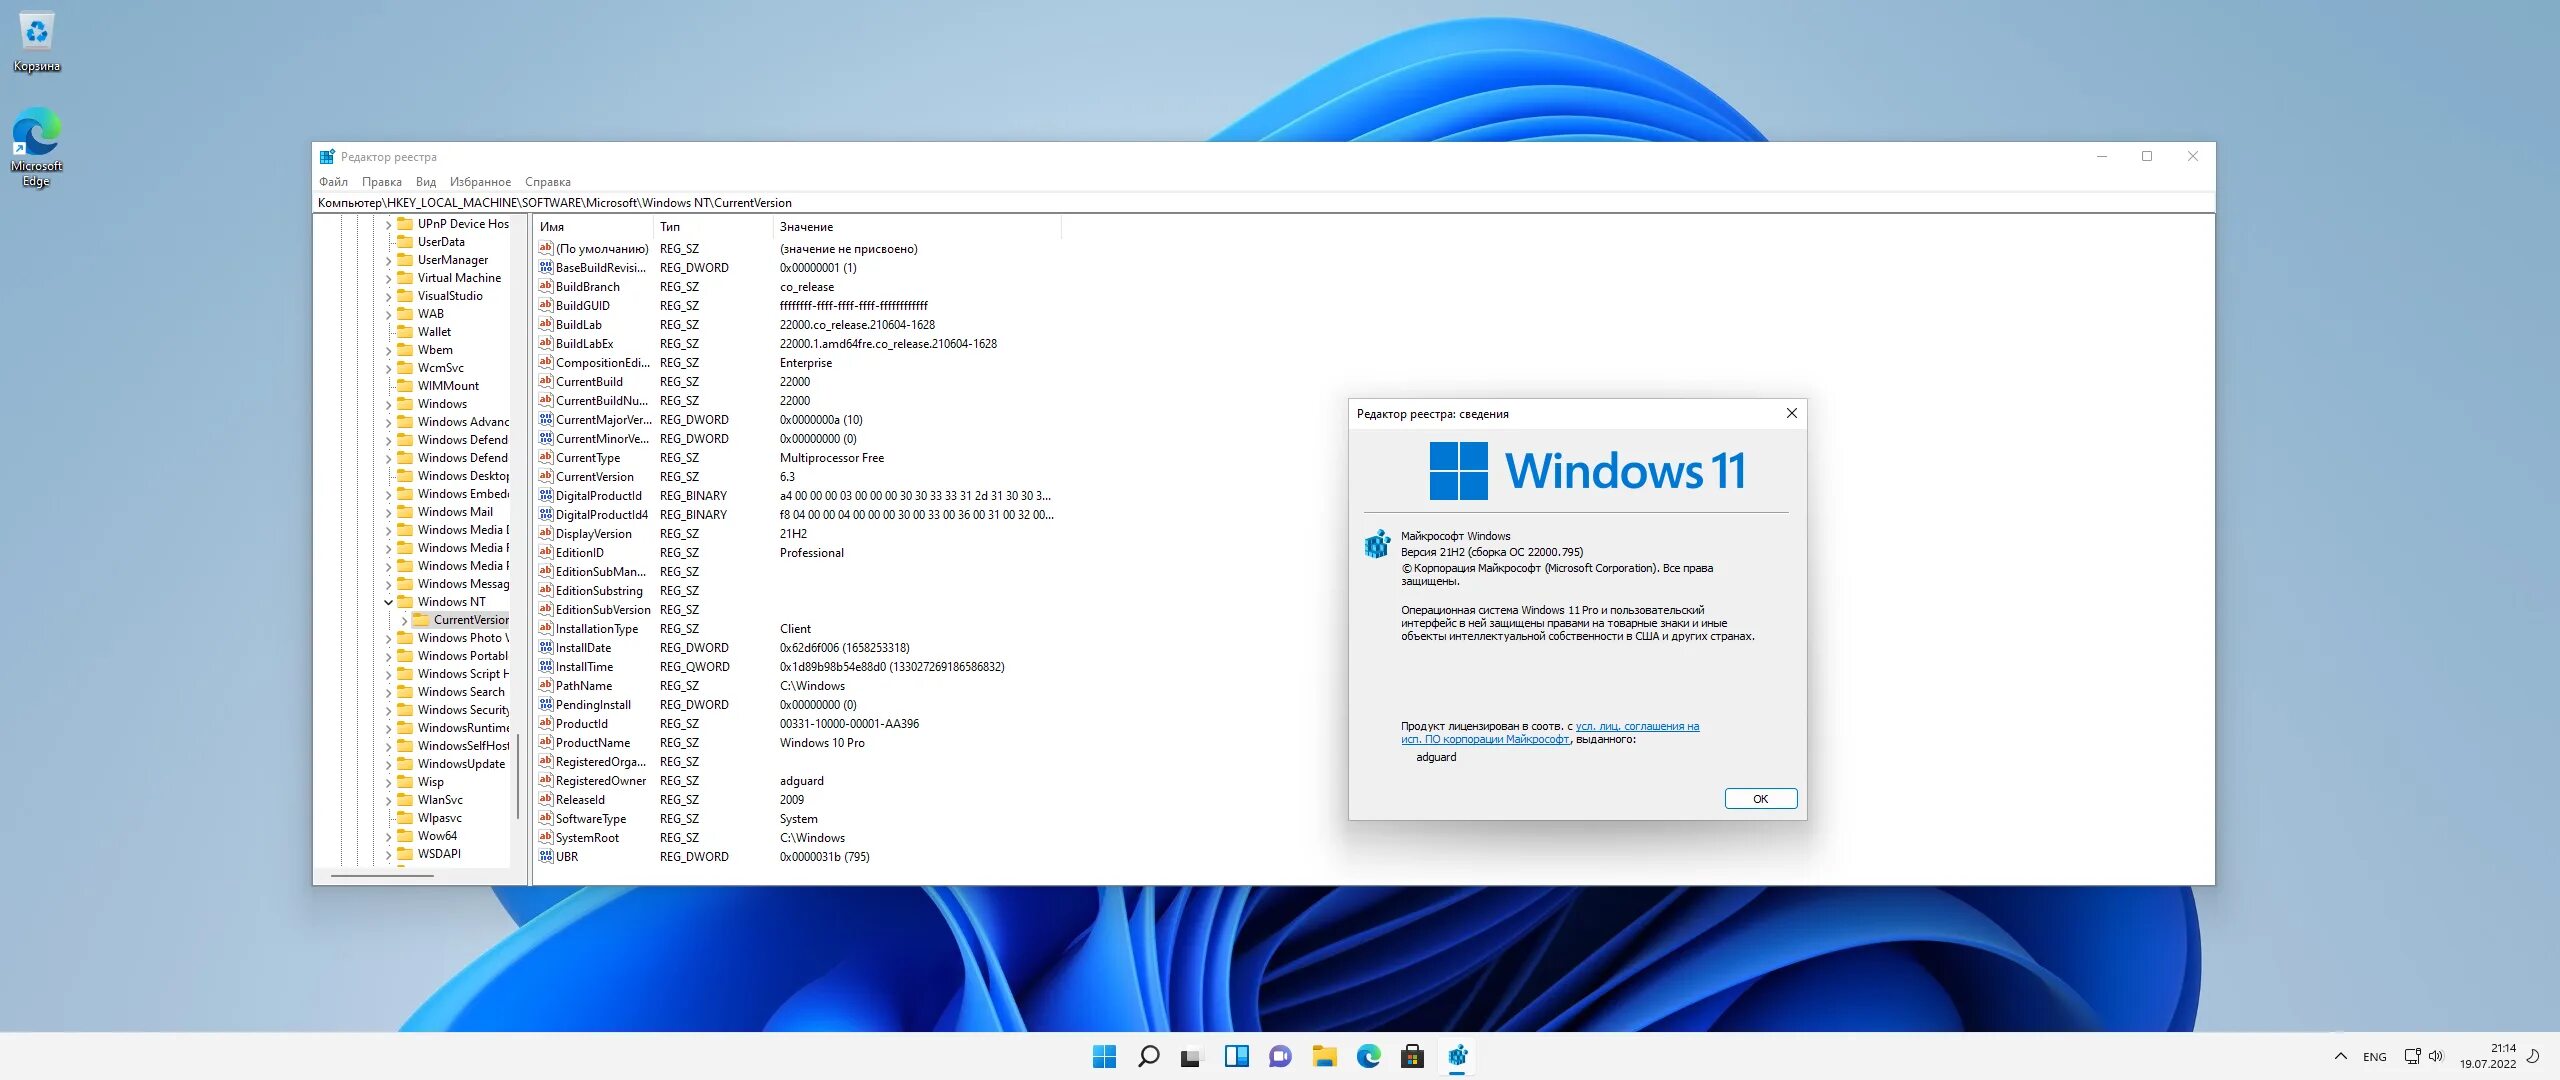 Windows 11 2023 update. Win 11 Скриншоты. Виндовс 10 версия 21h2 64 бит. Установщик Windows 11. Версия 21h2.